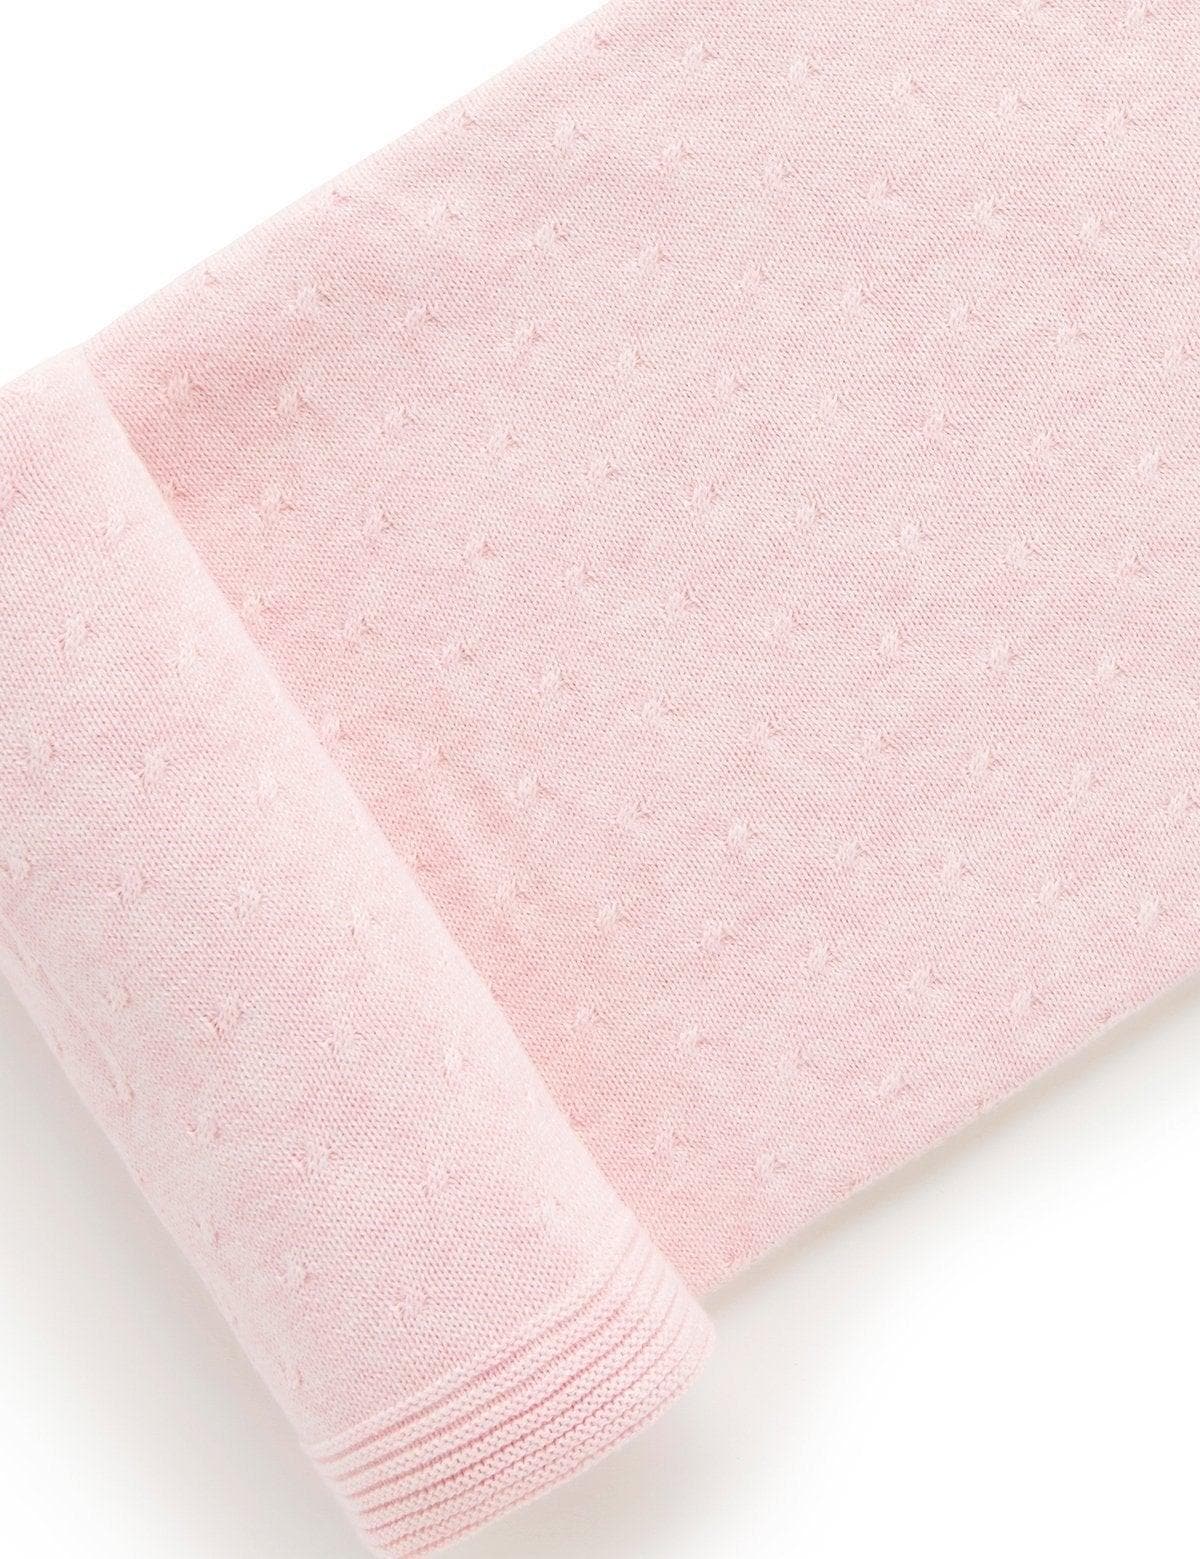 Purebaby Essentials Blanket in Pale Pink Melange